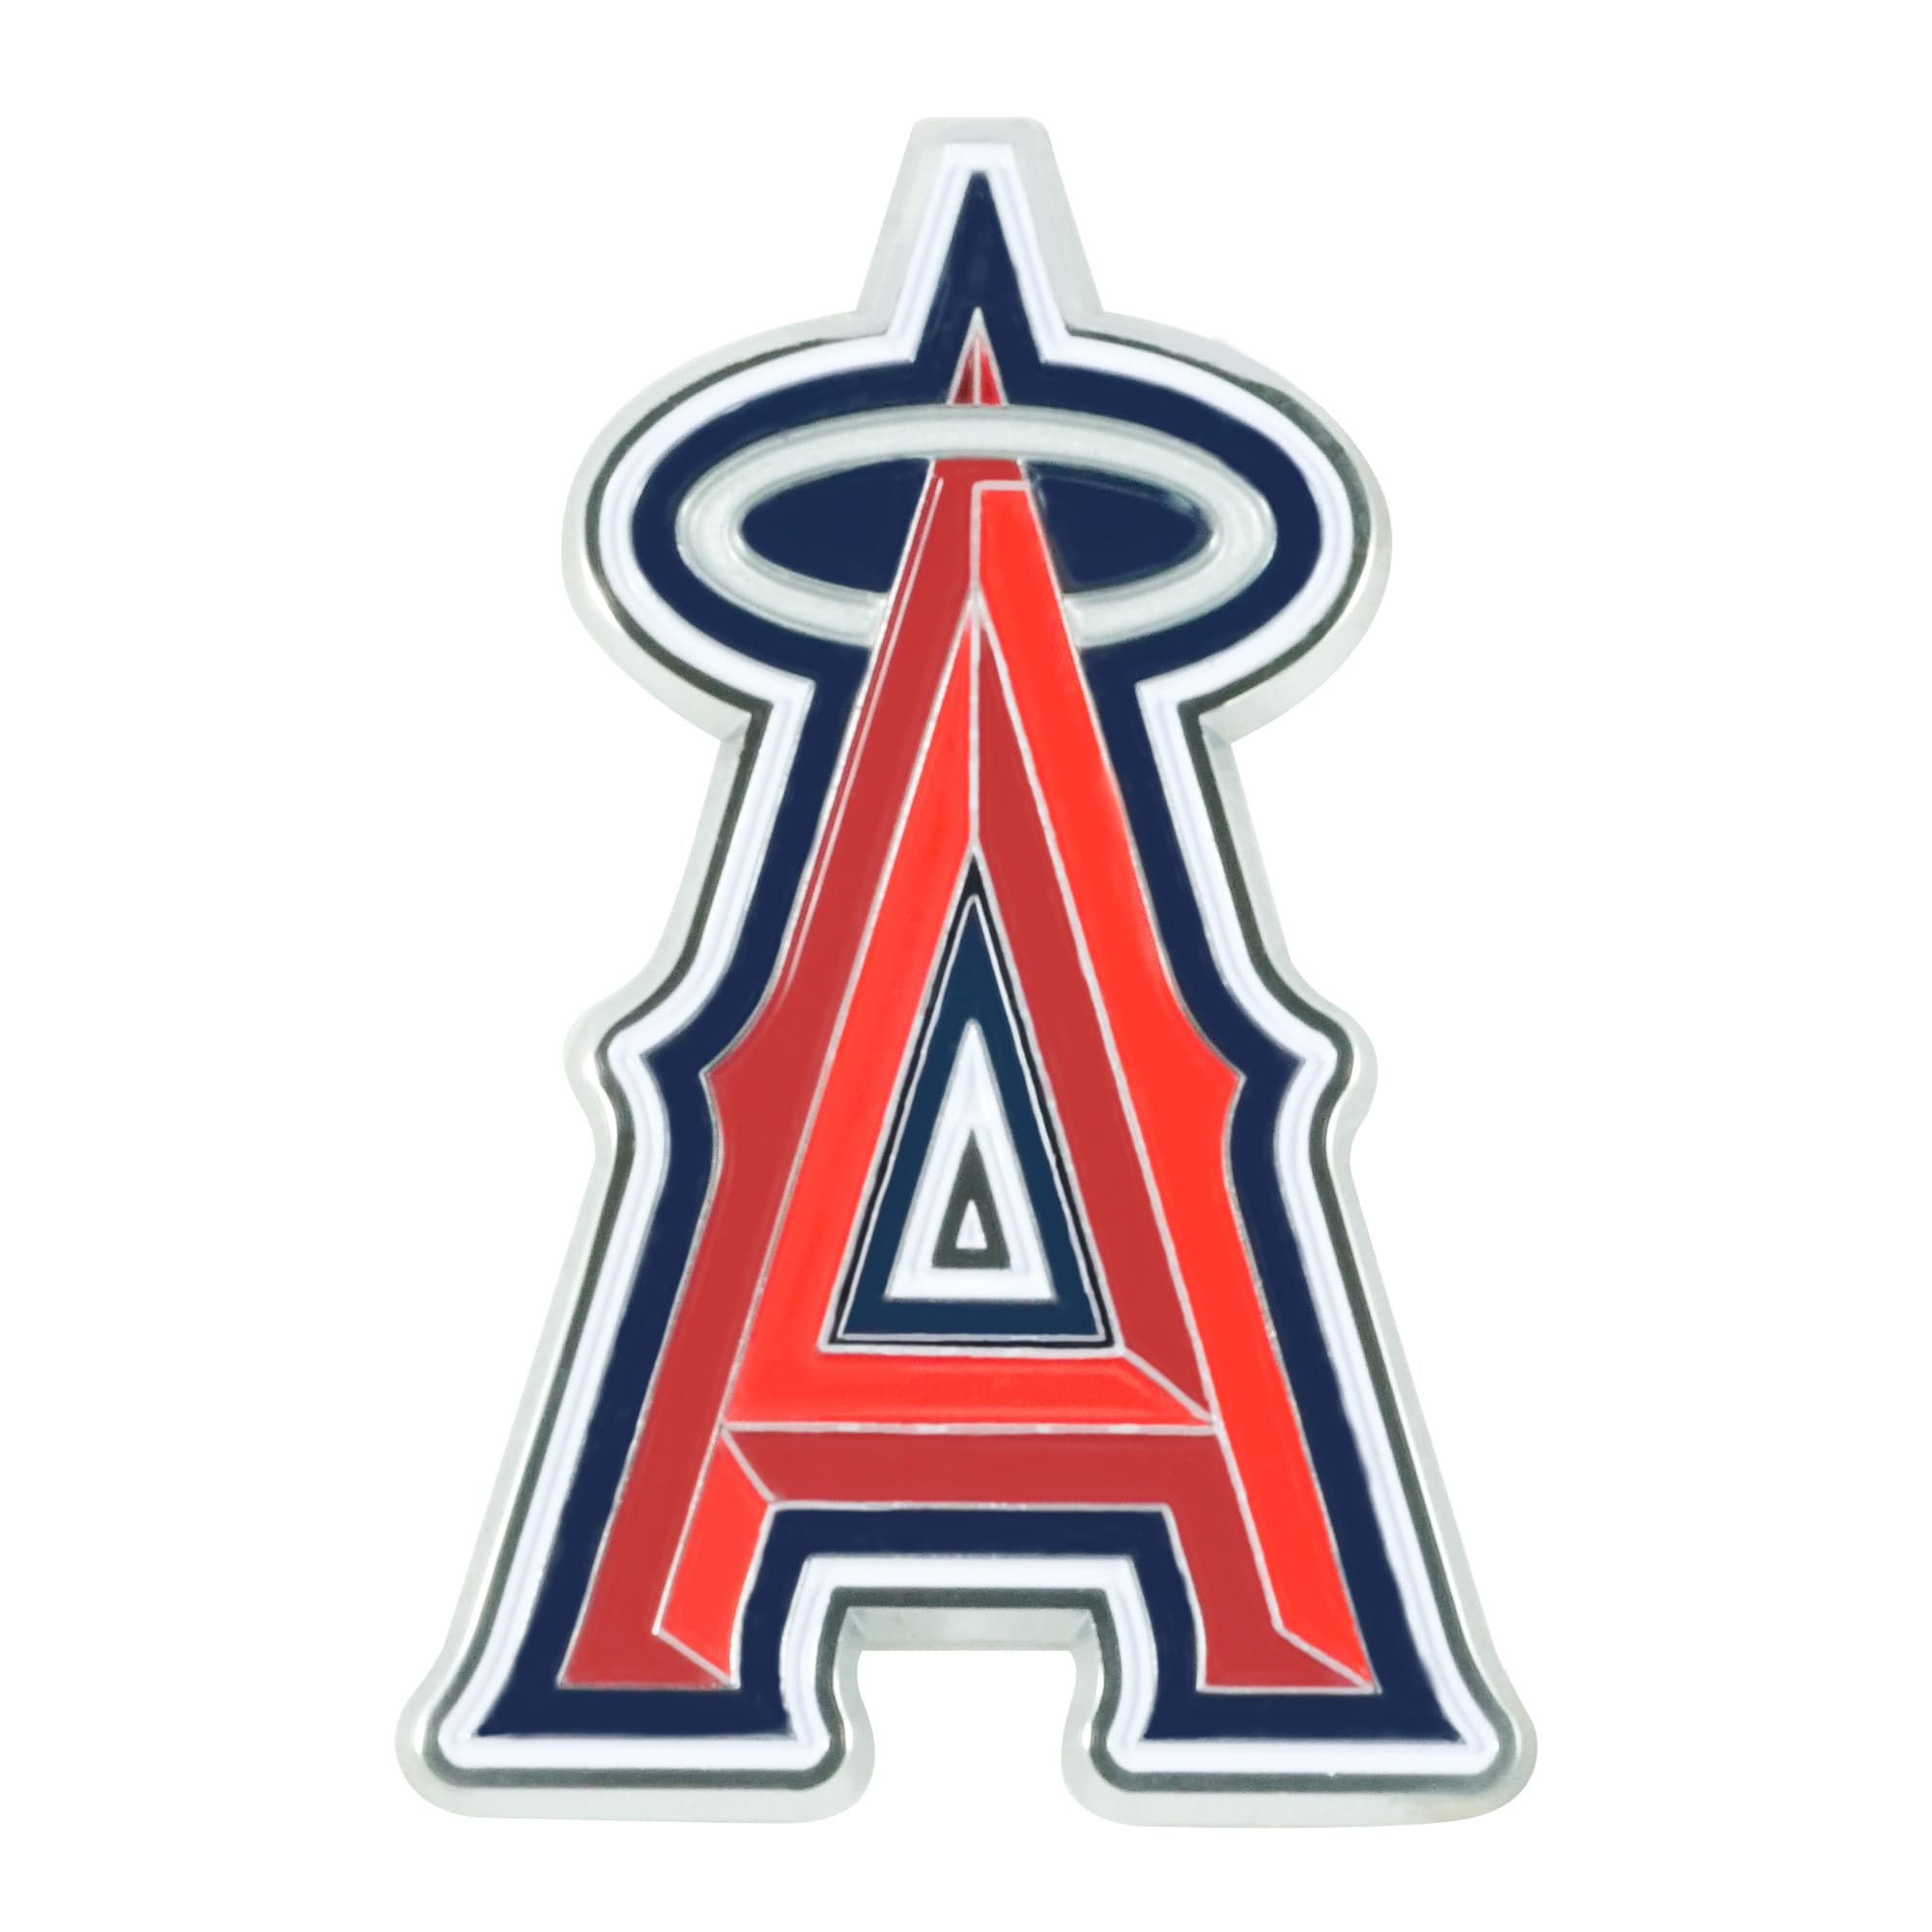 Los Angeles Angels  Wikipedia